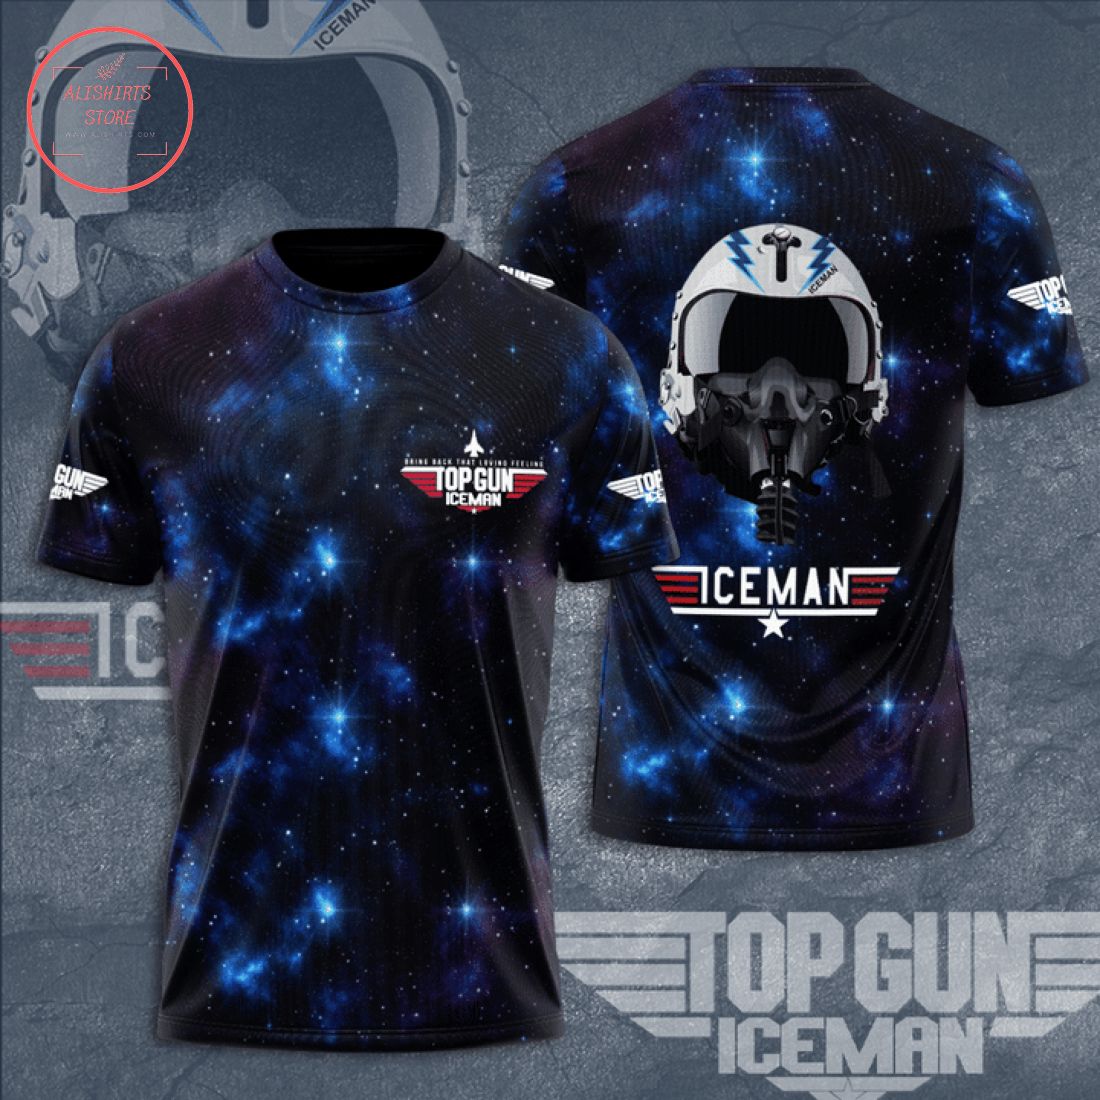 Top Gun Iceman All Over Printed Shirt